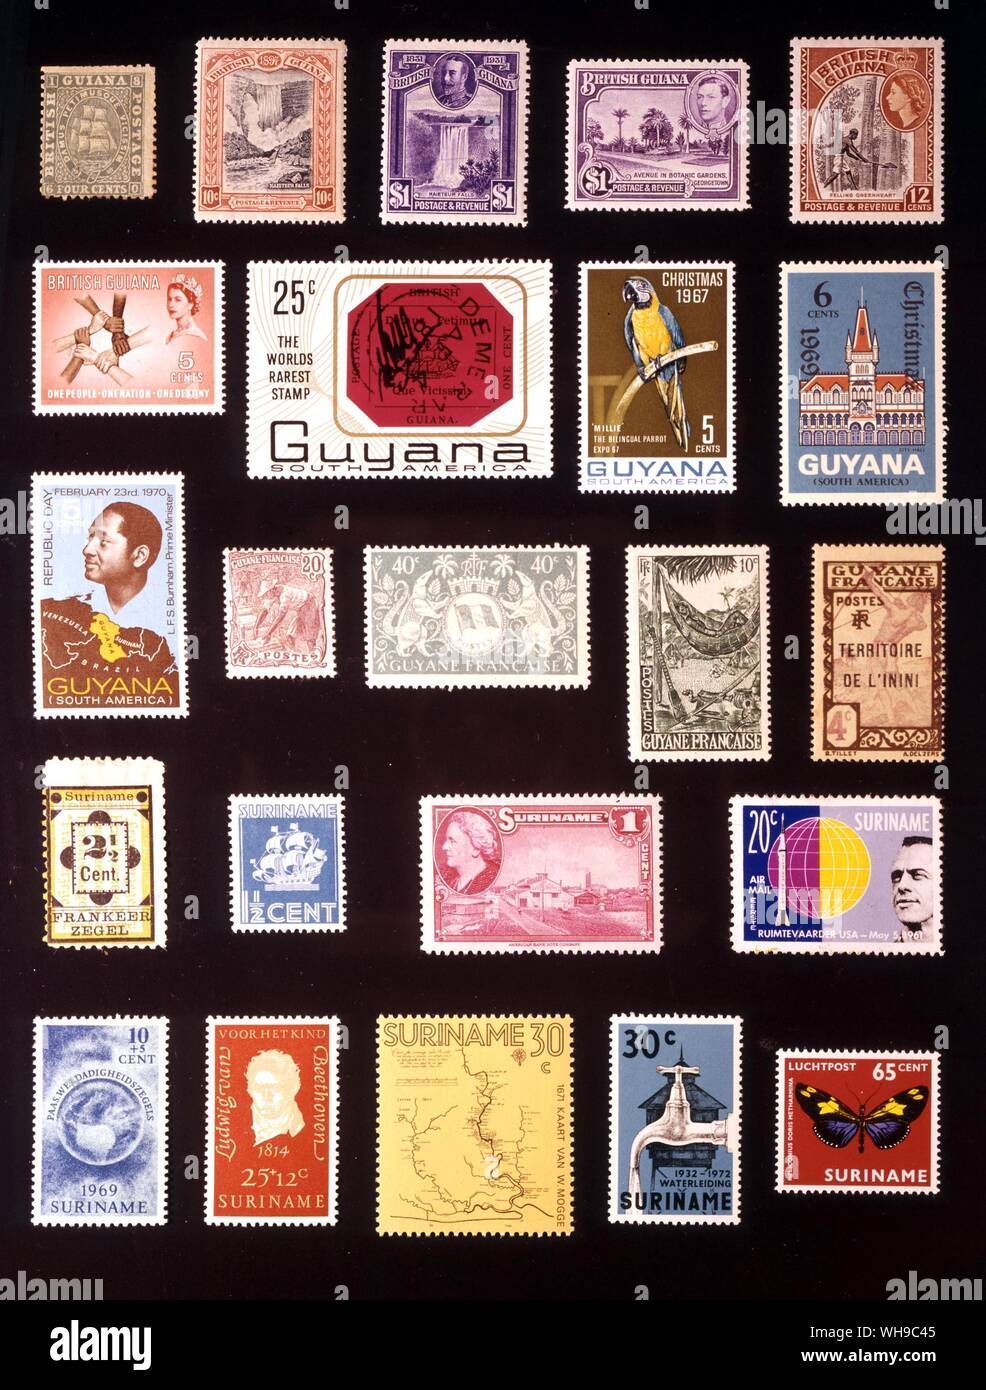 AMERICA - THE GUIANAS: (left to right) 1. British Guiana, 4 cents, 1860, 2. British Guiana, 10 cents, 1898, 3. British Guiana, 1 dollar, 1931, 4. British Guiana, 1 dollar, 1938, 5. British Guiana, 12 cents, 1954, 6. British Guiana, 5 cents, 1961, 7. Guyana, 25 cents, 1967, 8. Guyana, 5 cents, 1969, 9. Guyana, 6 cents, 1969, 10. Guyana, 5 cents, 1970, 11. French Guiana, 20 centimes, 1904, 12. French Guiana, 40 centimes, 1945, 13. French Guiana, 10 centimes, 1947, 14. Inini, 4 centimes, 1932, 15. Surinam, 2.5 cents, 1892, 16. Surinam, 1.5 cents, 1936, 17. Surinam, 1 cent, 1945, 18. Surinam, 20 Stock Photo